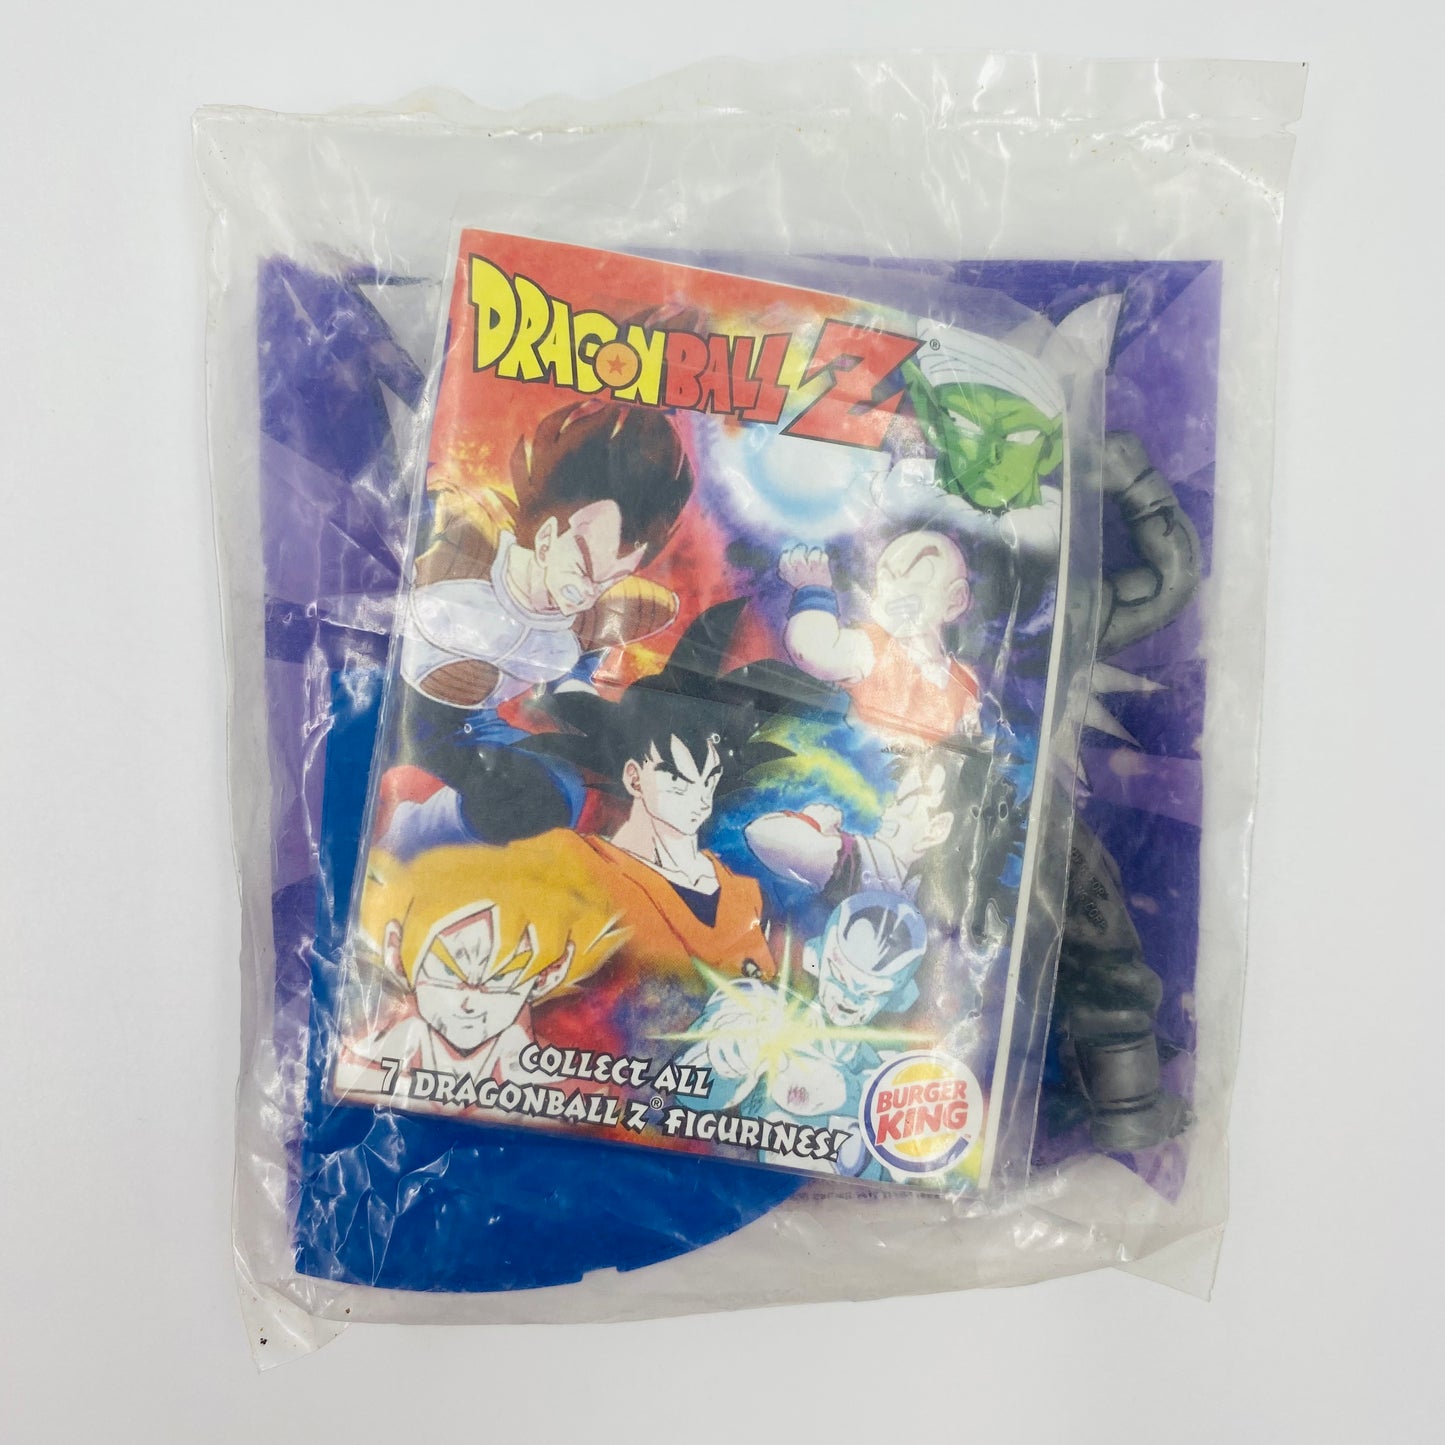 Dragonball Z Krillin Burger King Kids' Meals toy (2000) bagged